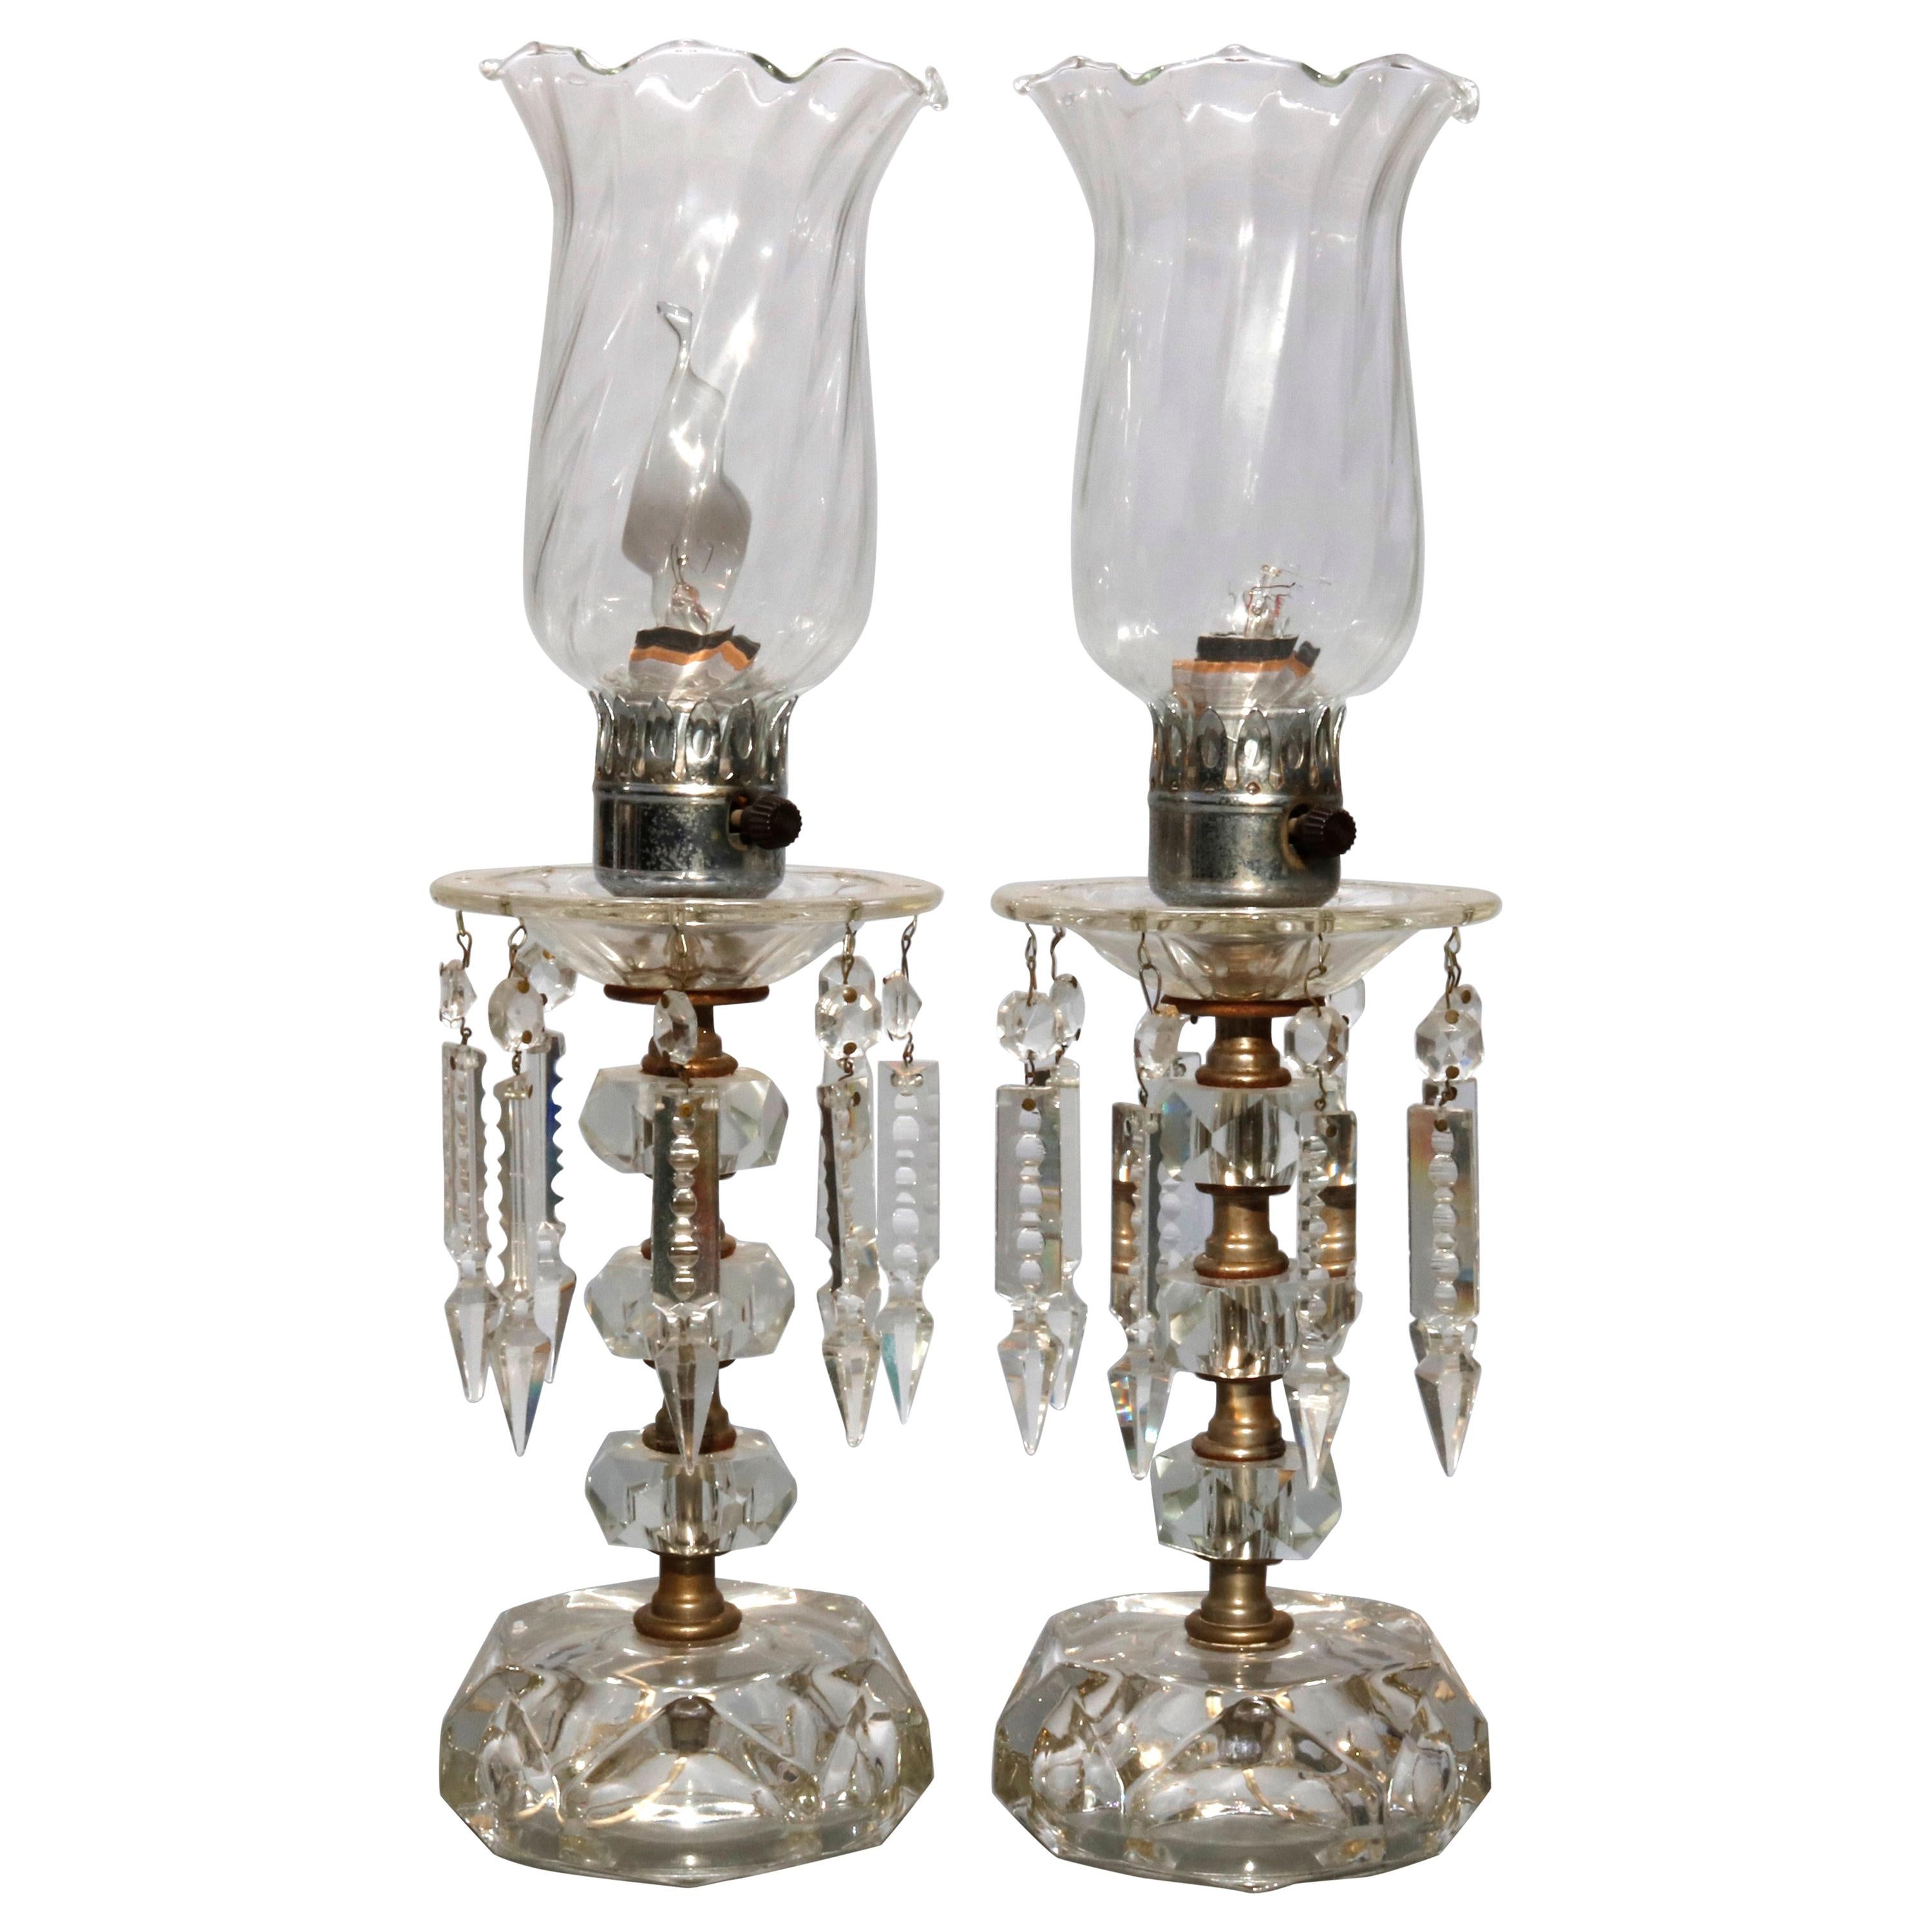 Antique Pair of Cut Crystal Candelabra Balustrade Table Lamps, circa 1930